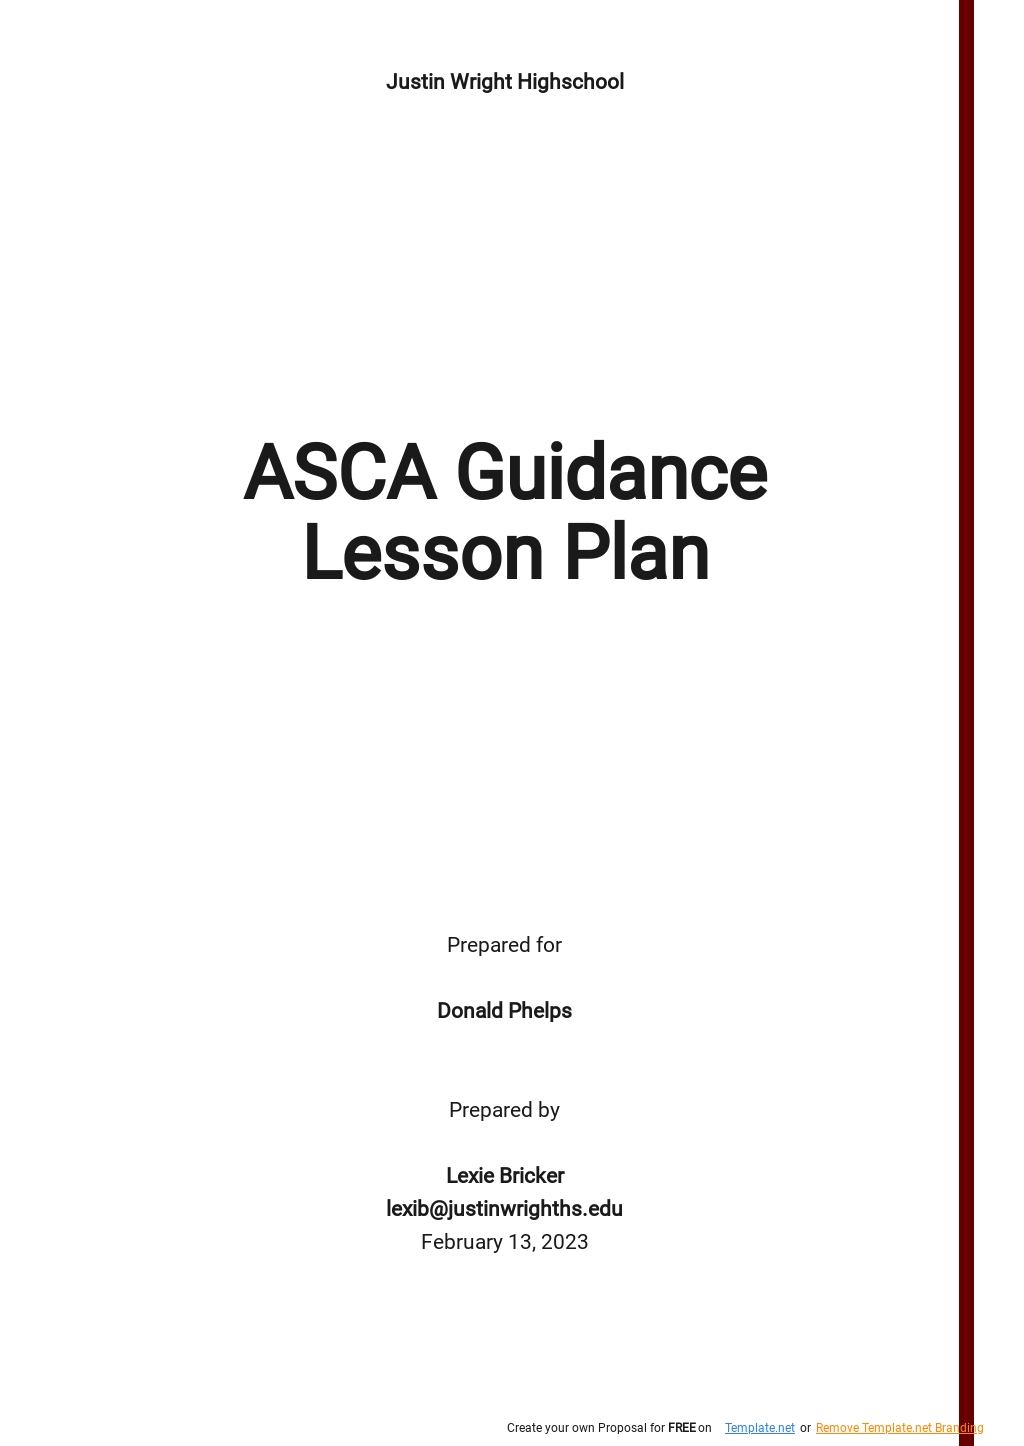 ASCA Guidance Lesson Plan Template.jpe